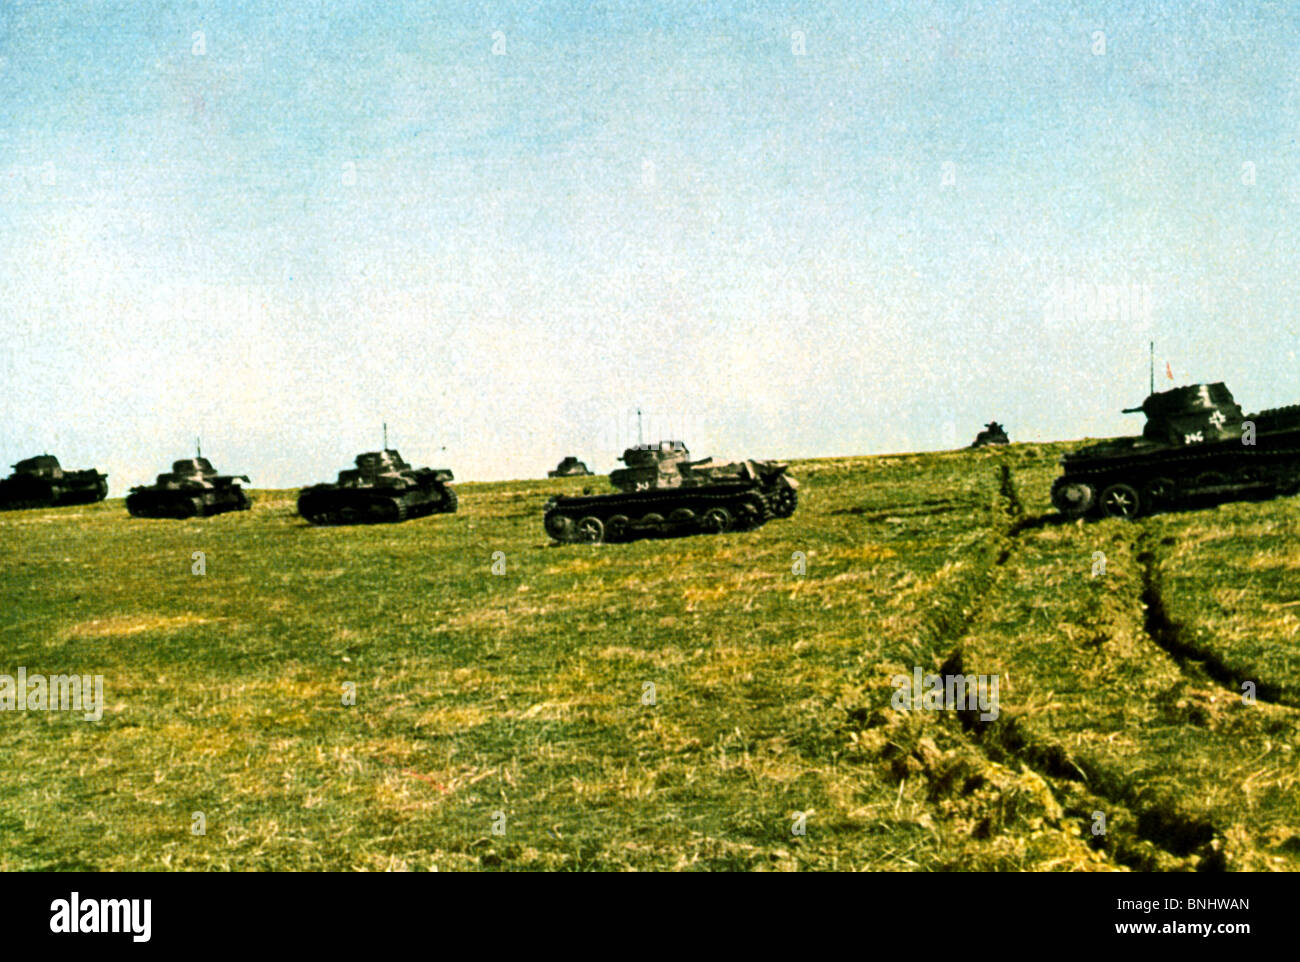 World War II Nazi Germany tank tanks between 1939-1940 Second World War WW2 war military army history historic historical Stock Photo